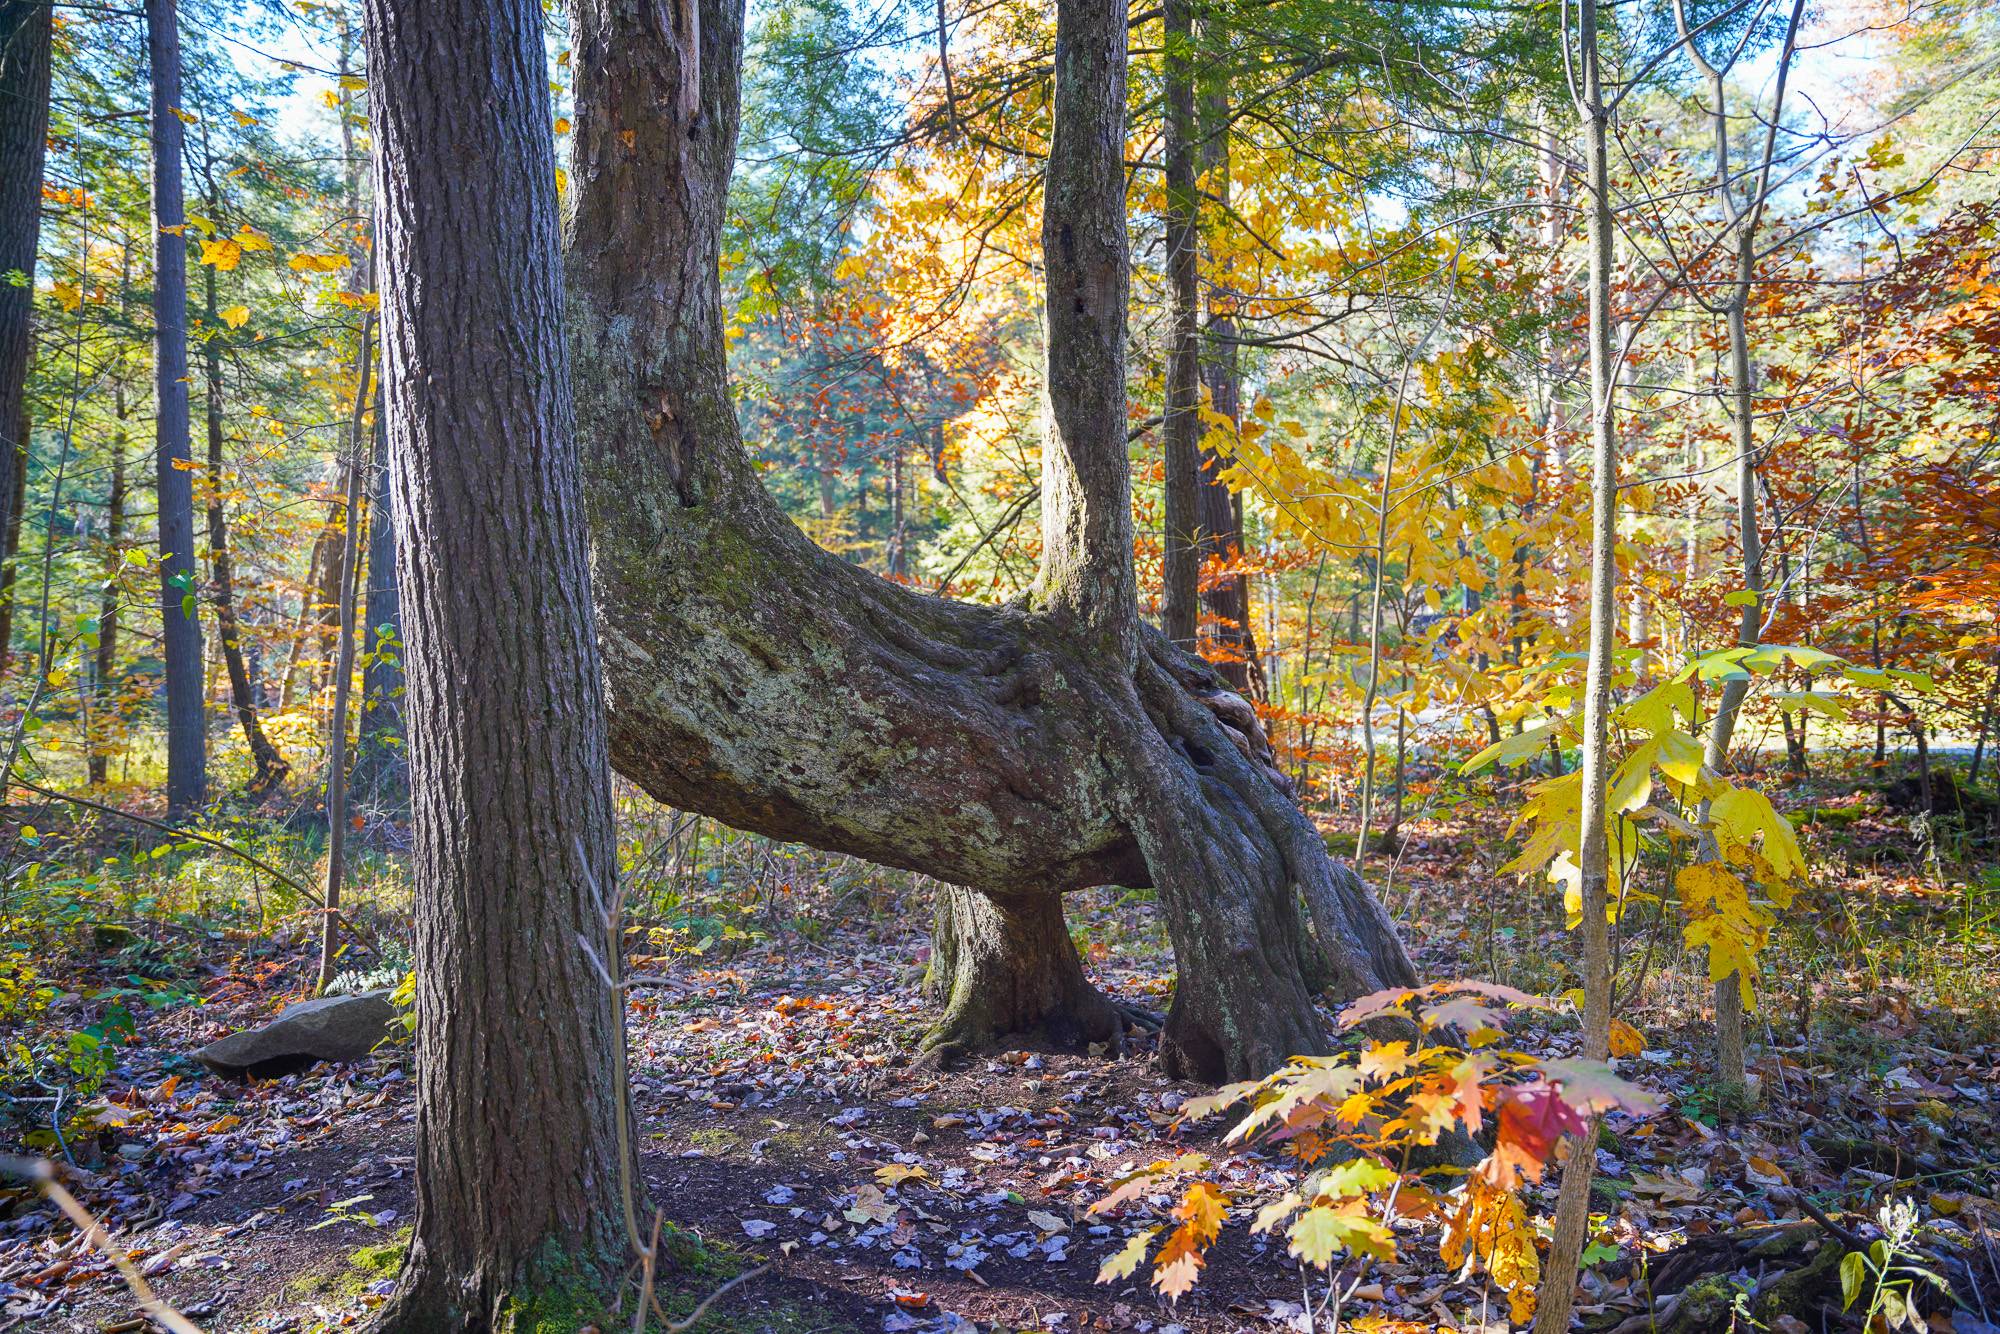 Bent Tree at Kooser State Park